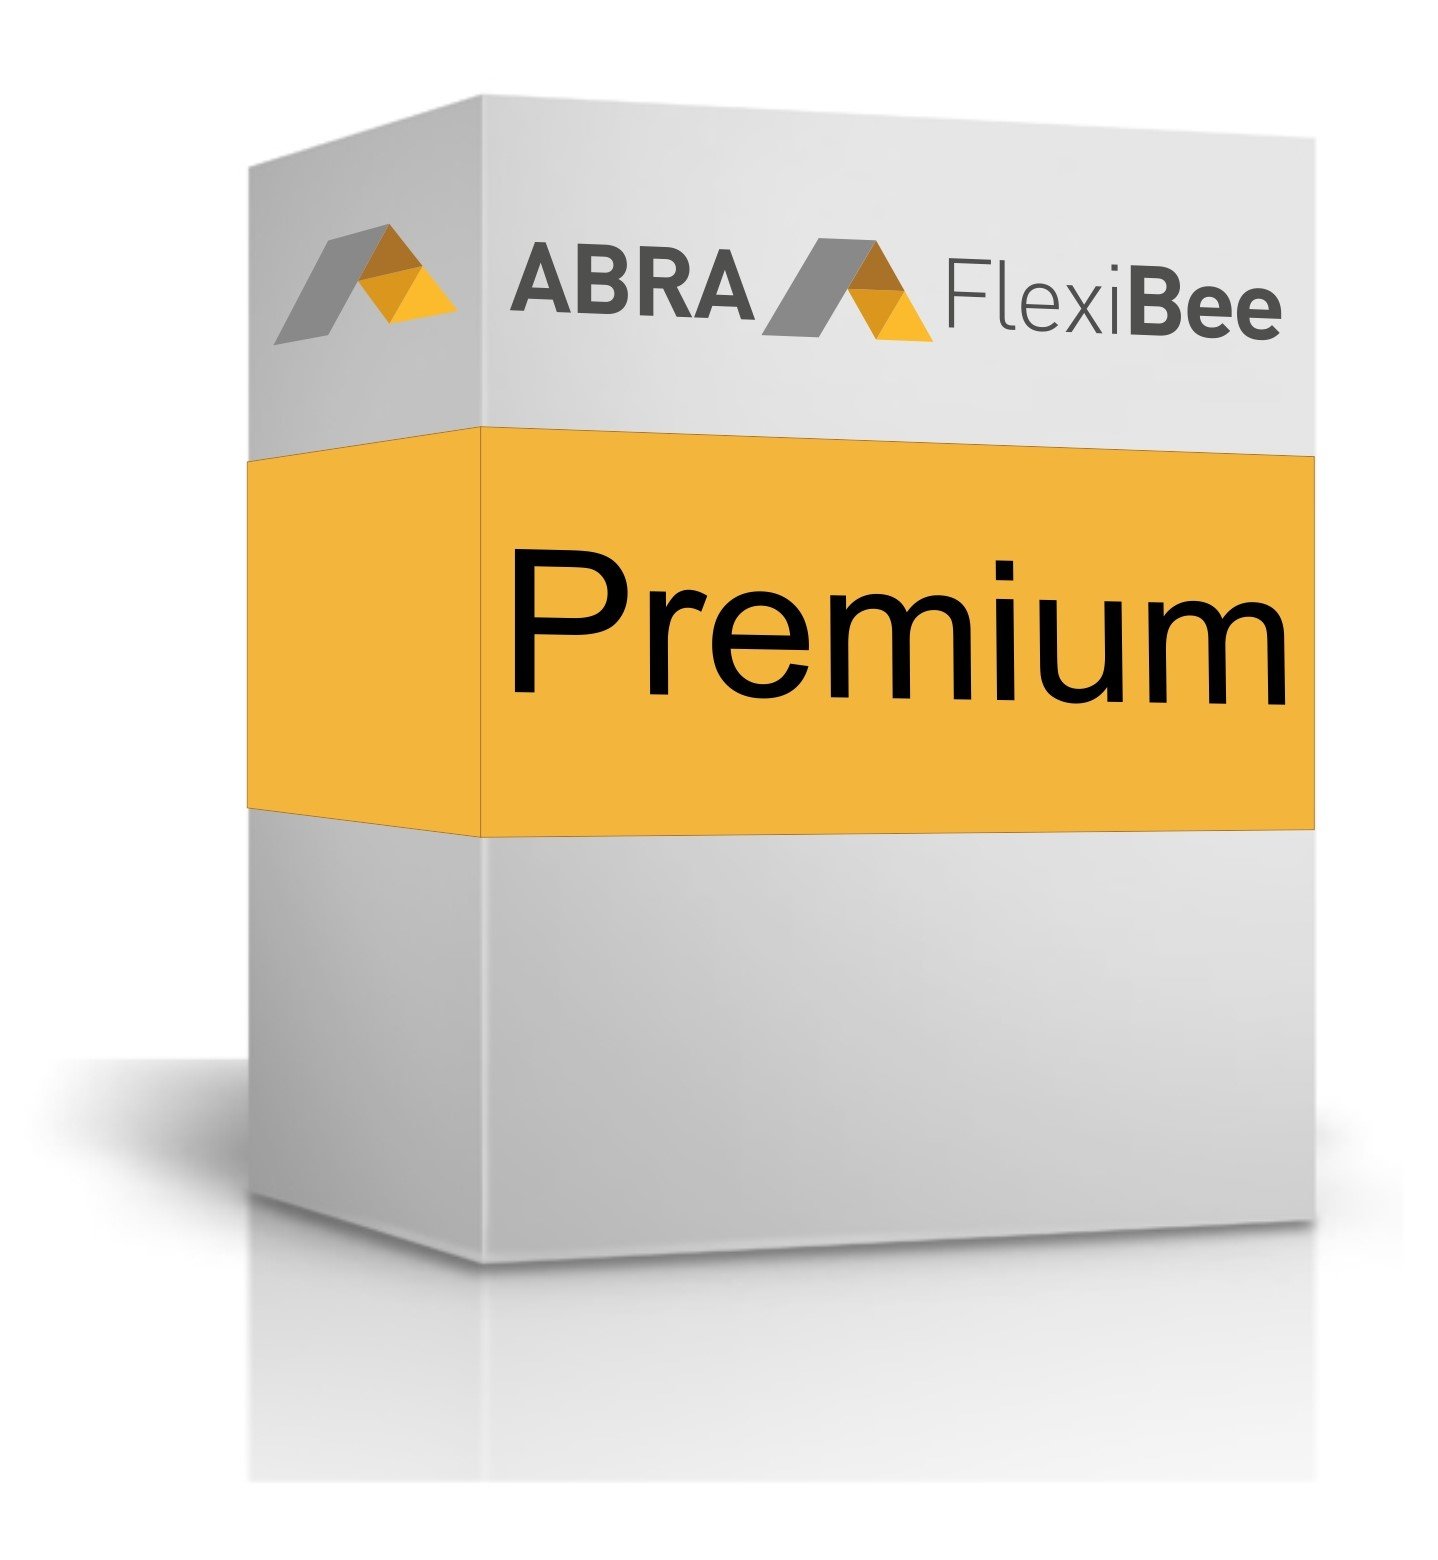 ABRA FlexiBee Premium licence